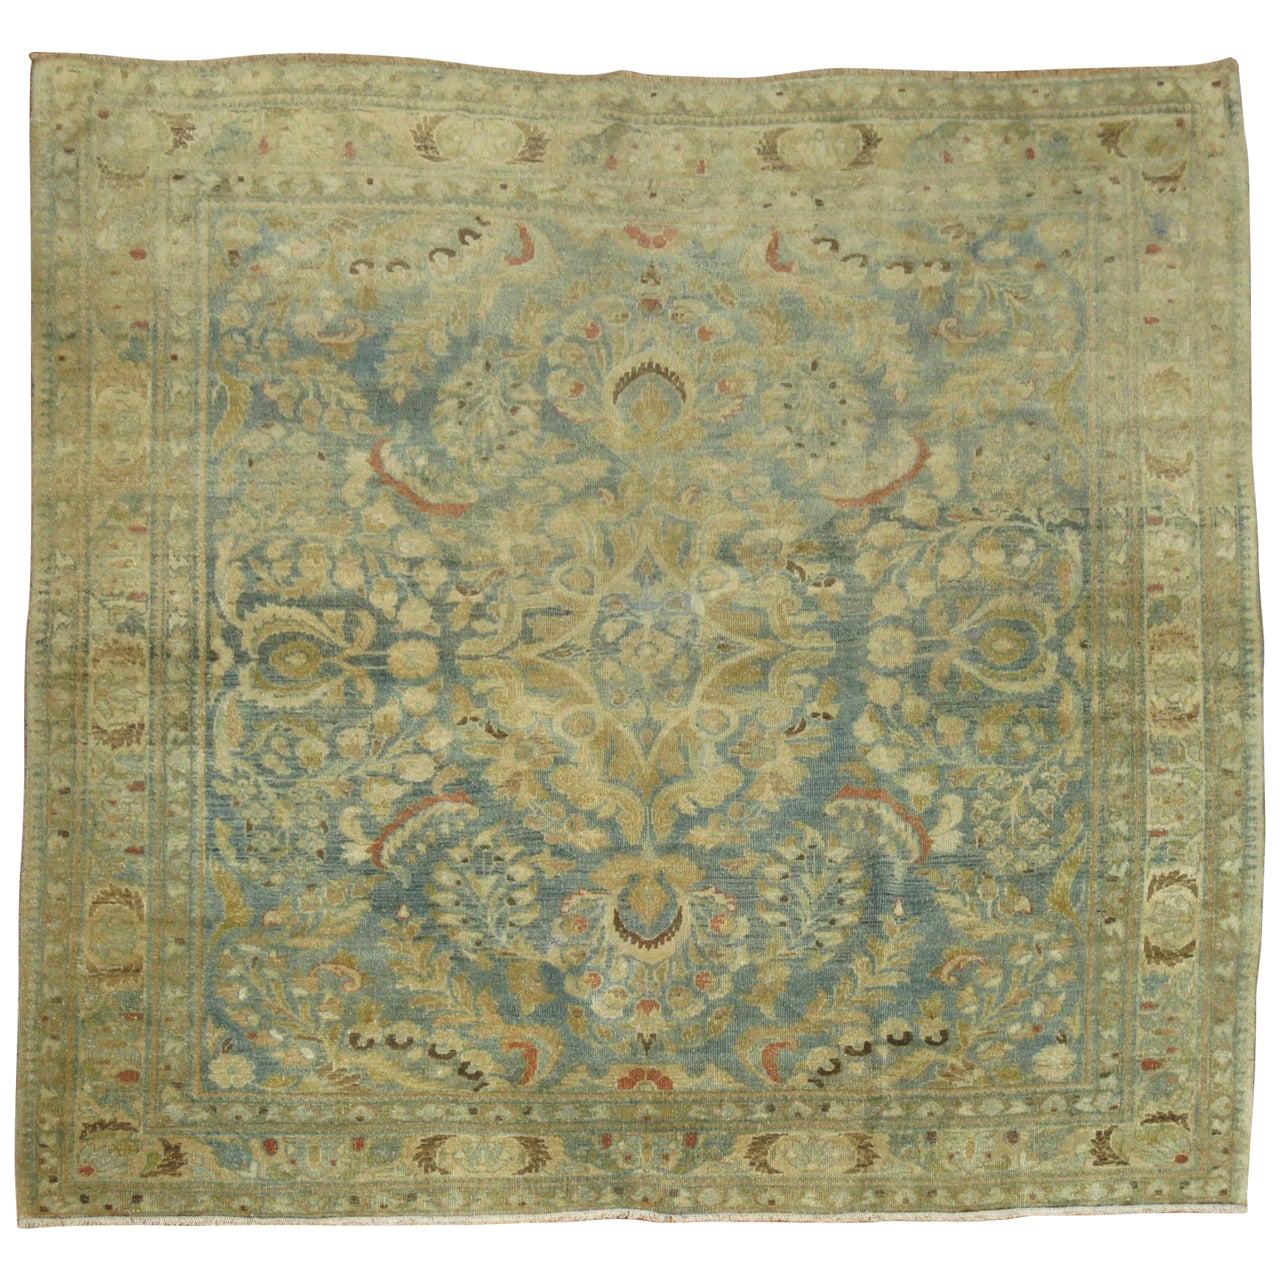 Antique Aqua Blue Color 4 foot Square Persian Traditonal Formal Sarouk Rug